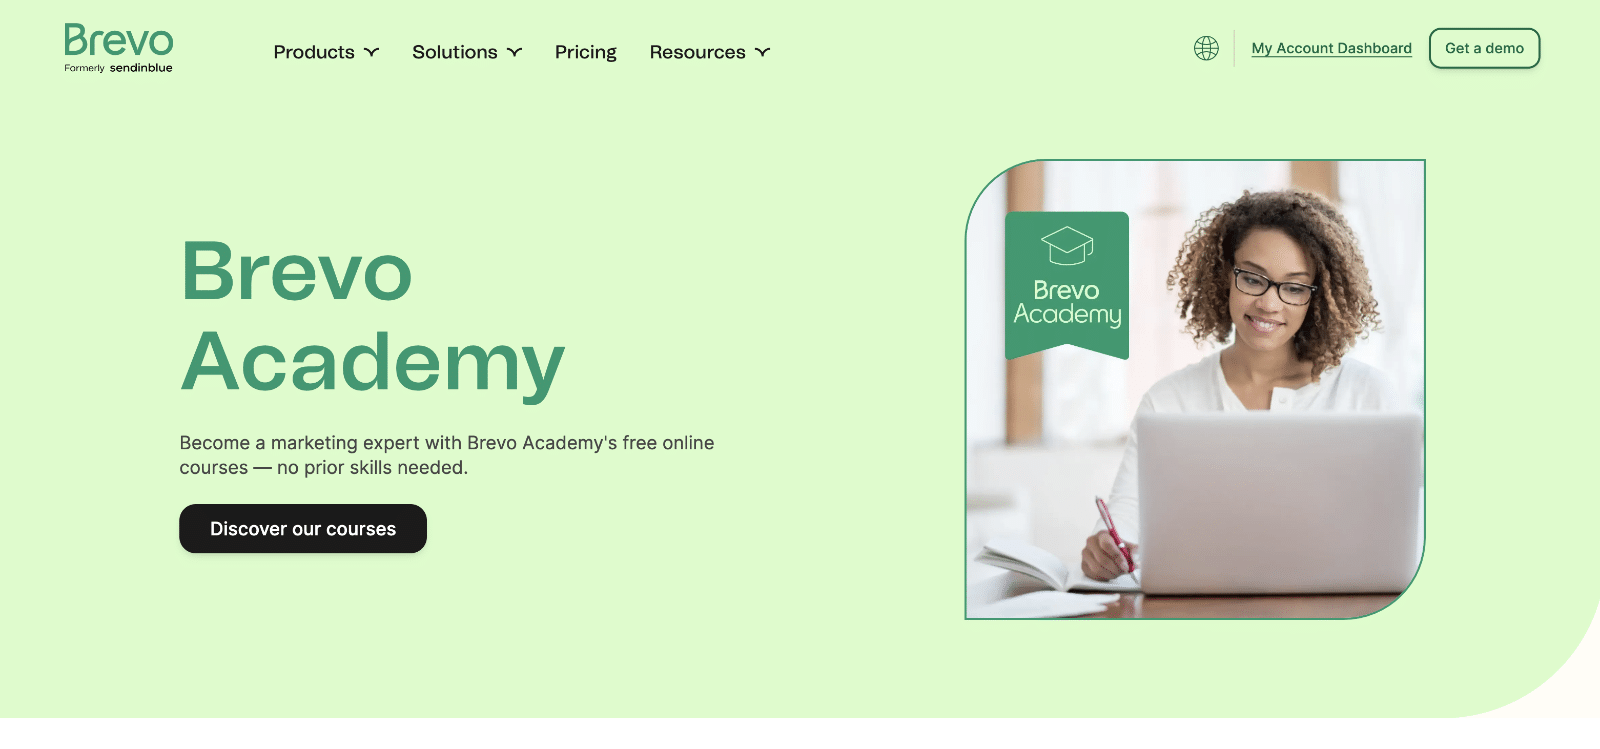 Brevo Academy free online courses